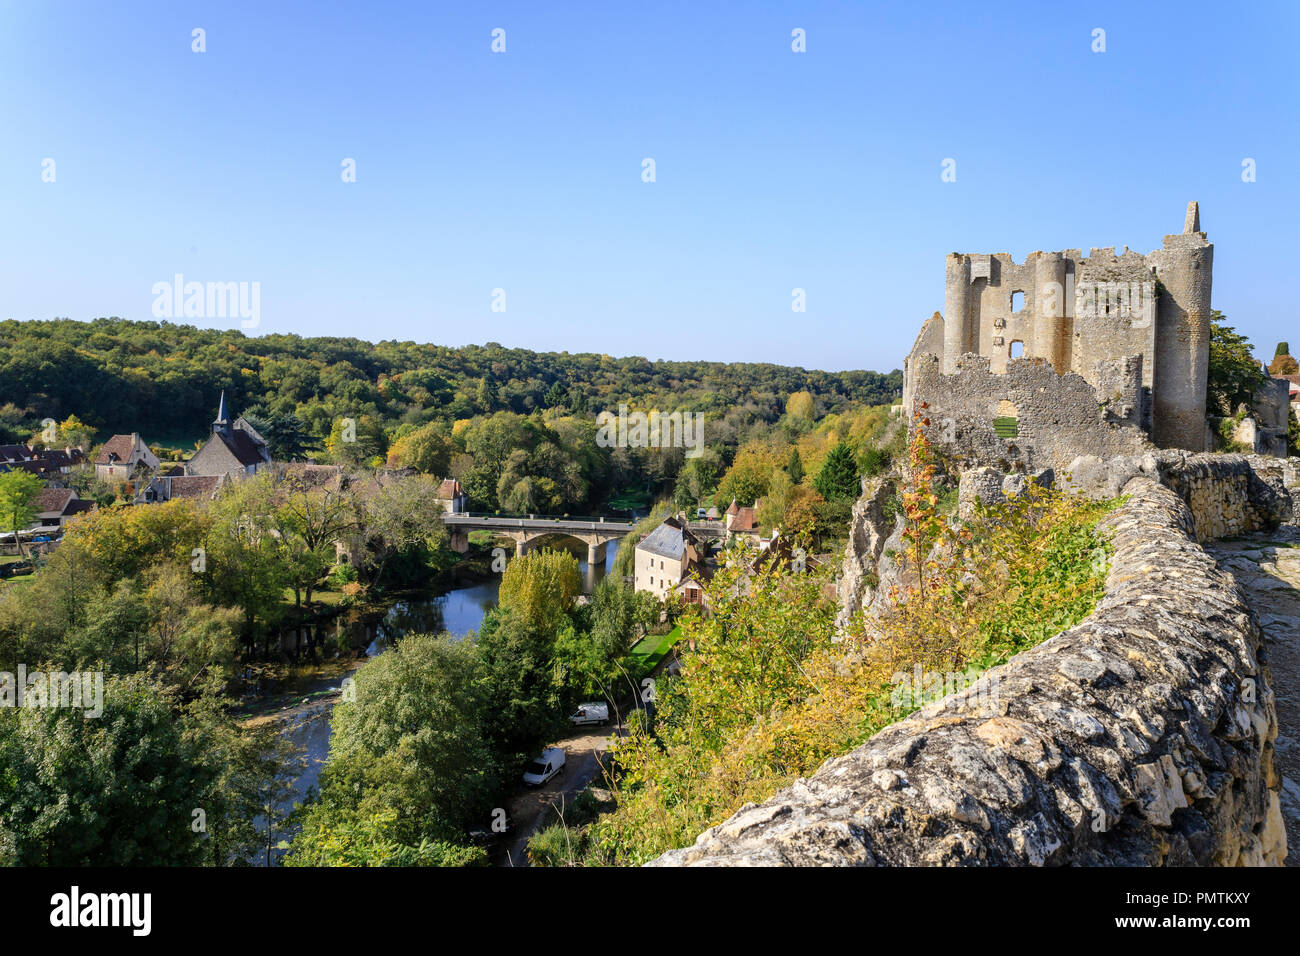 Frankreich, Vienne, Angles Sur L'anglin, beschriftet Les Plus beaux villages de France (Schönste Dörfer Frankreichs), Ruinen des Schlosses overlooki Stockfoto